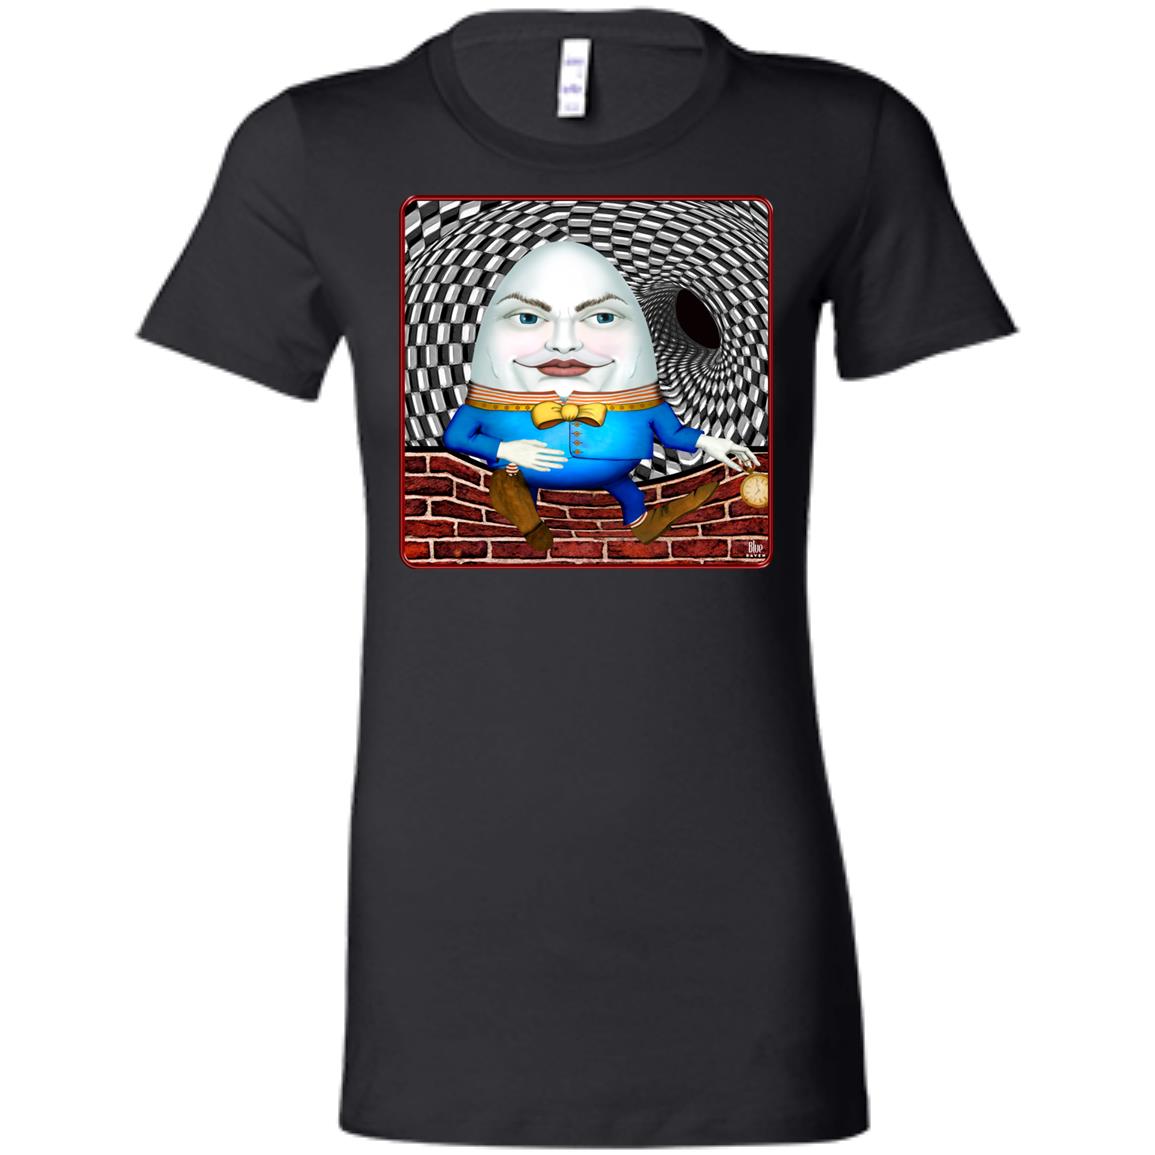 humpty dumpty - Women's Fitted T-Shirt